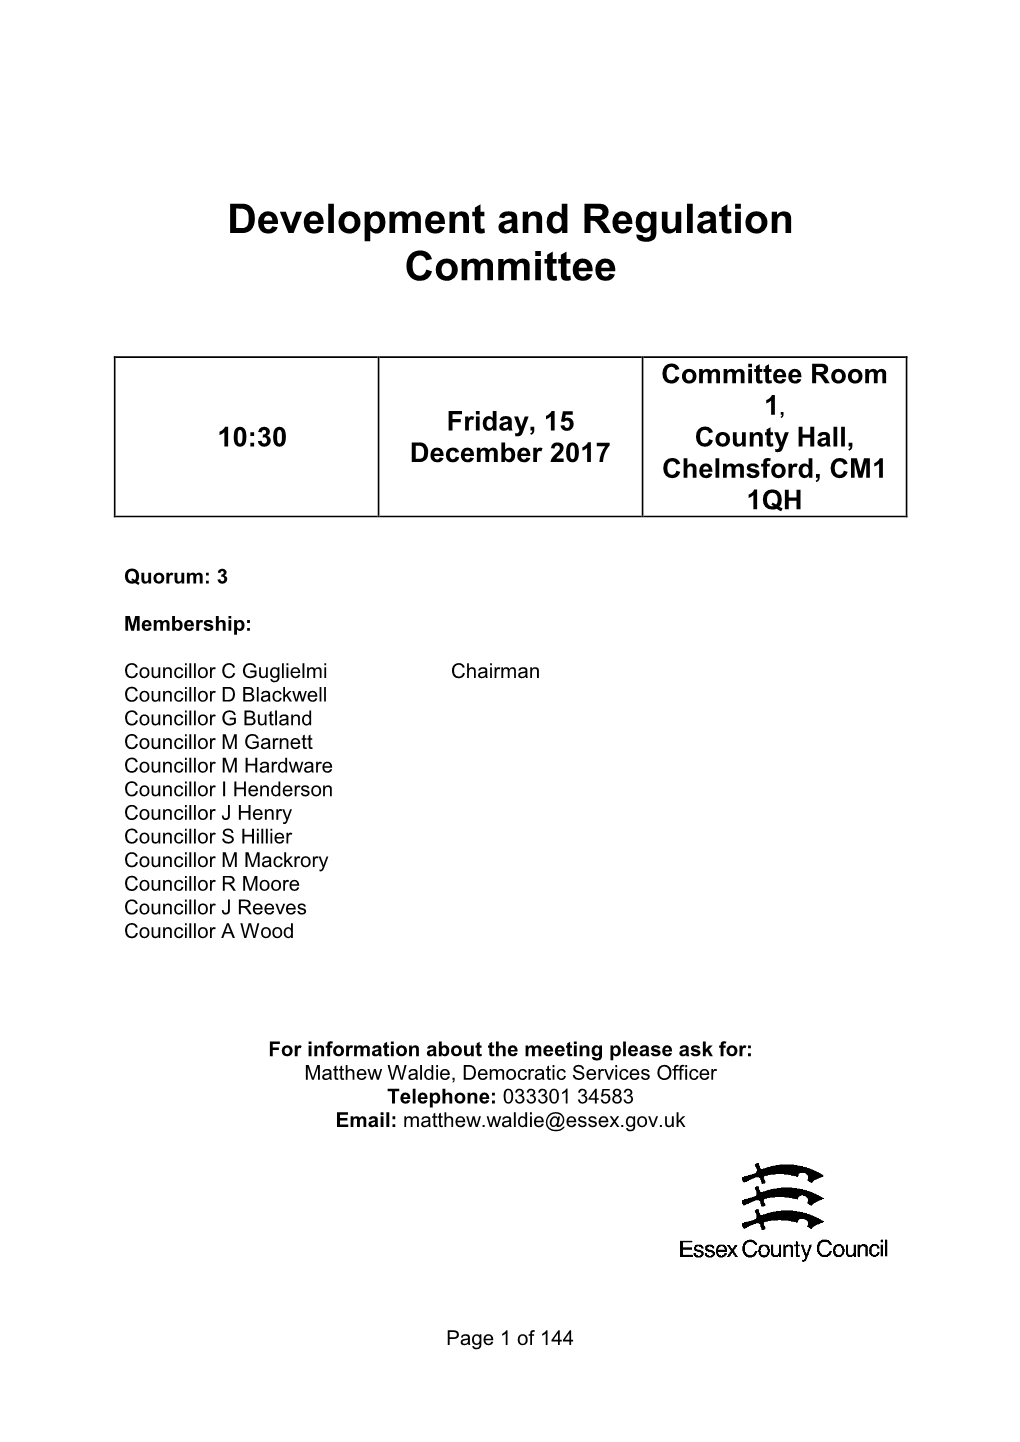 Development and Regulation Committee